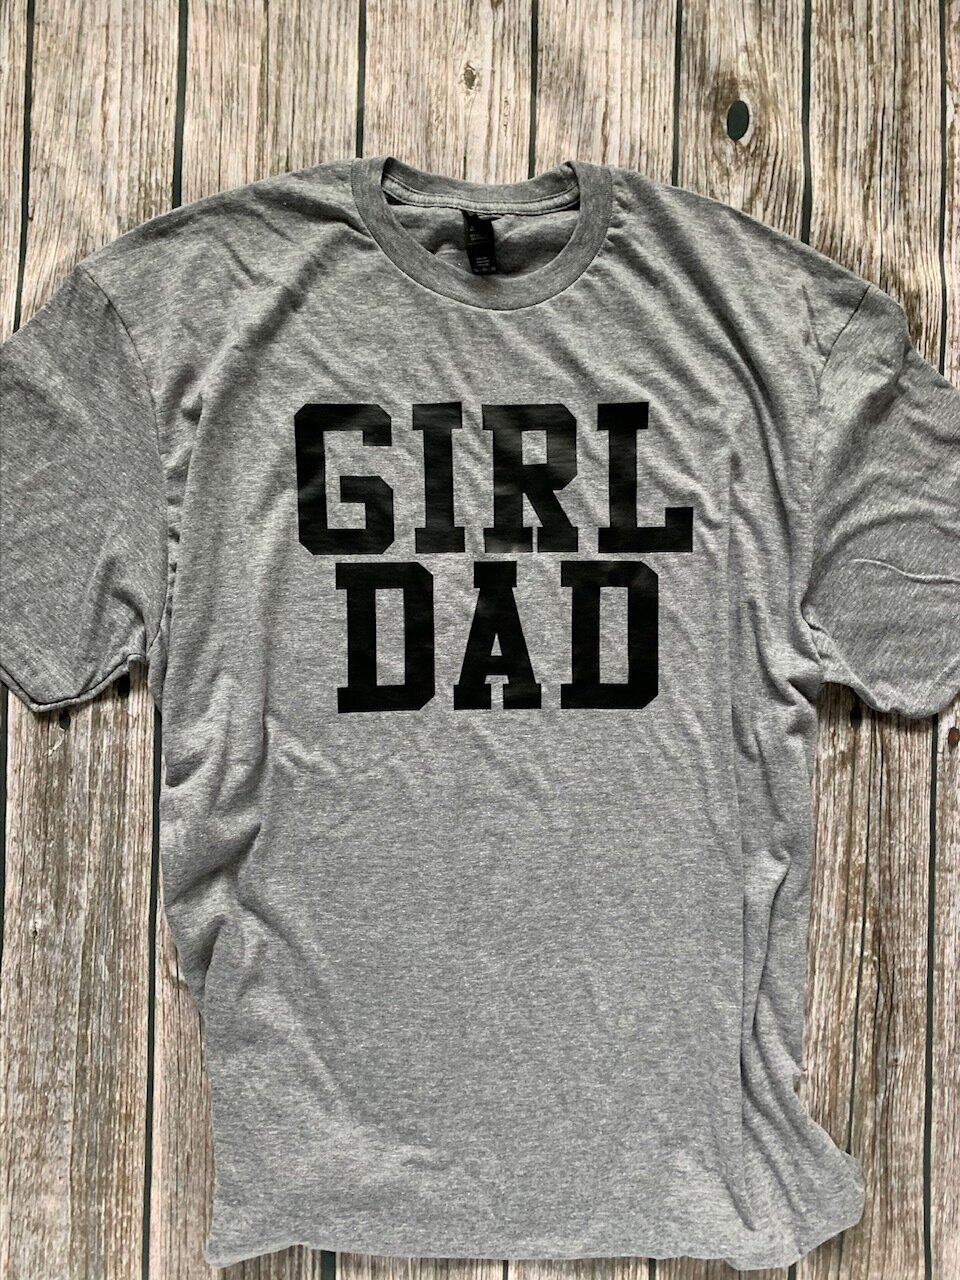 girl dad shirts